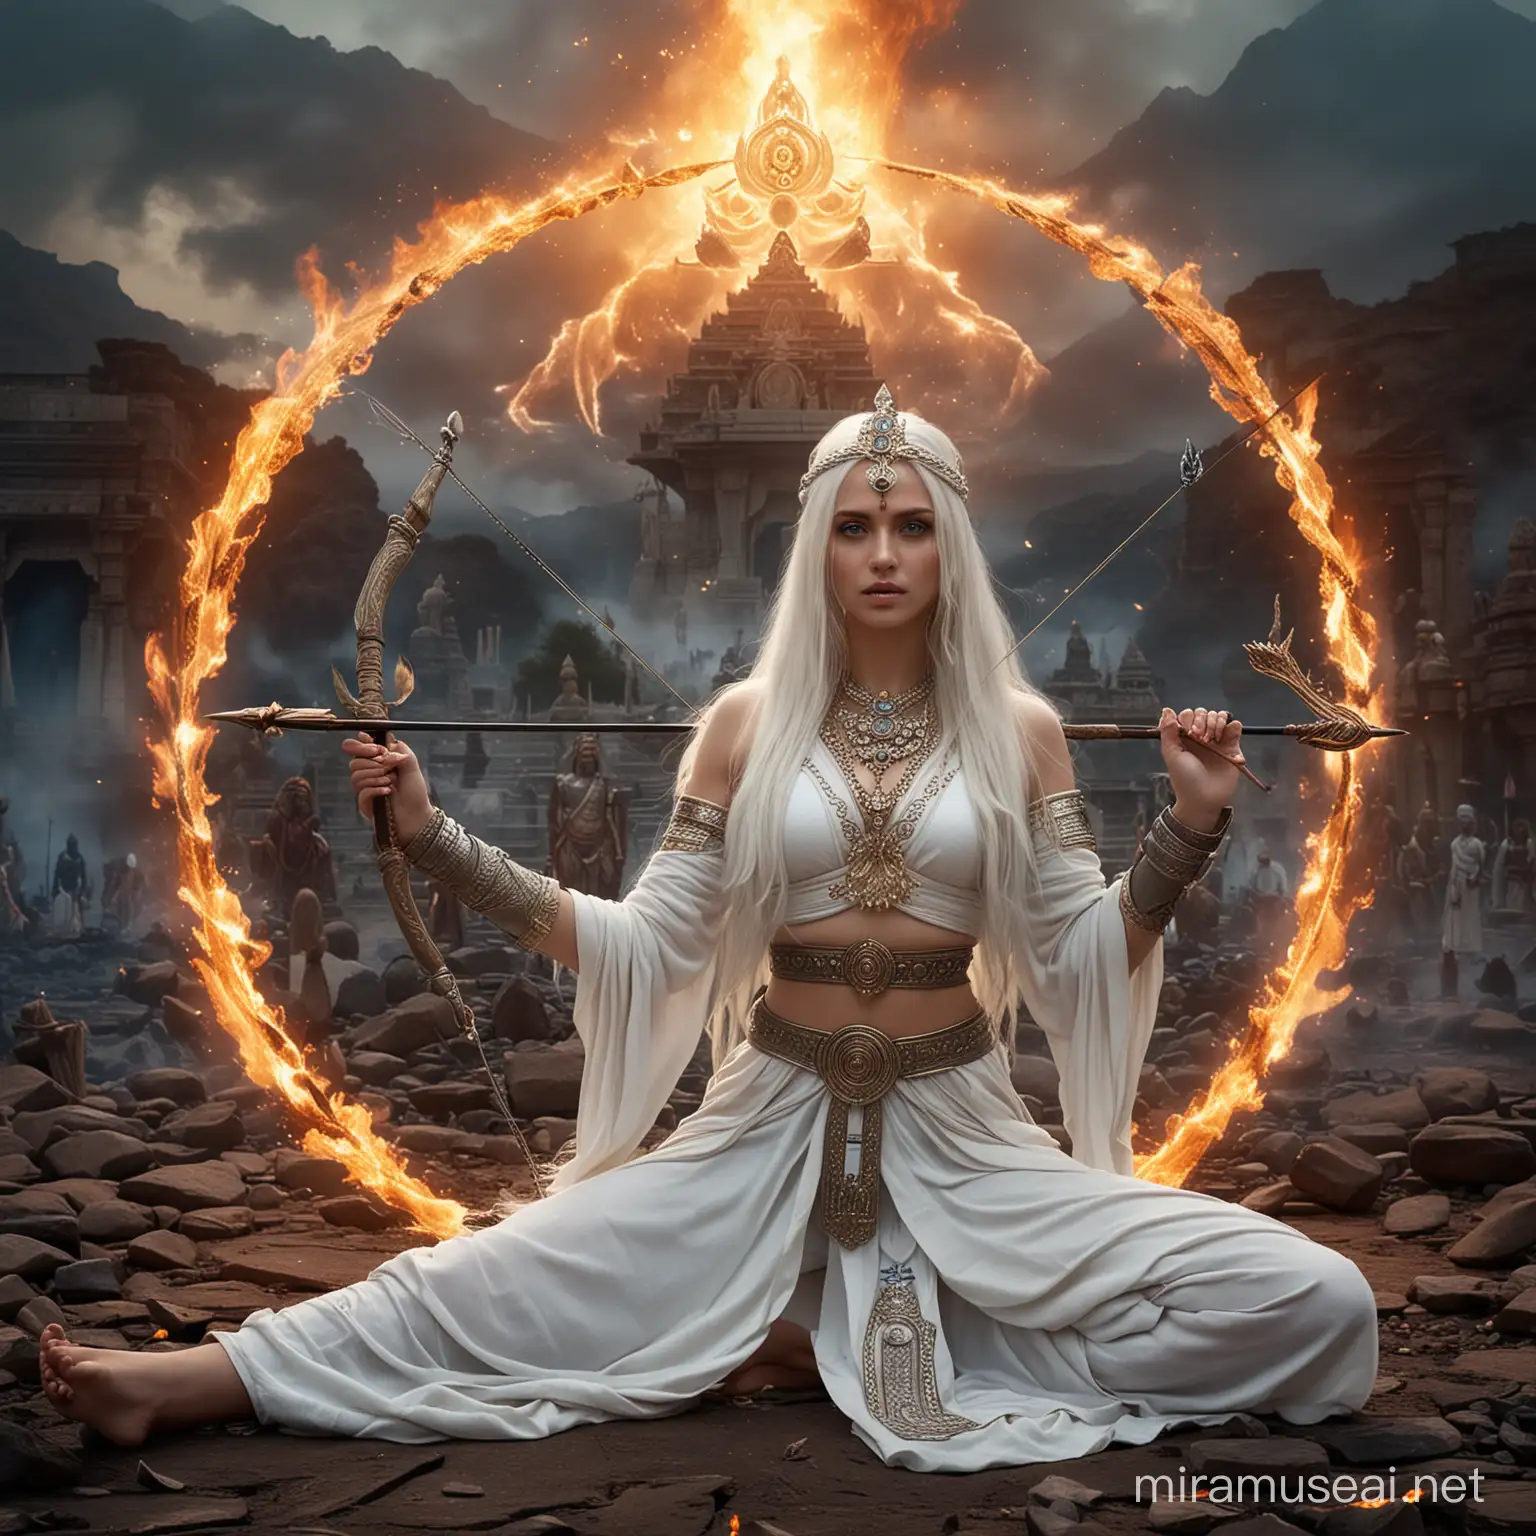 Powerful Hindu Empress Goddesses in Combat Amidst Mystic Fire Circles